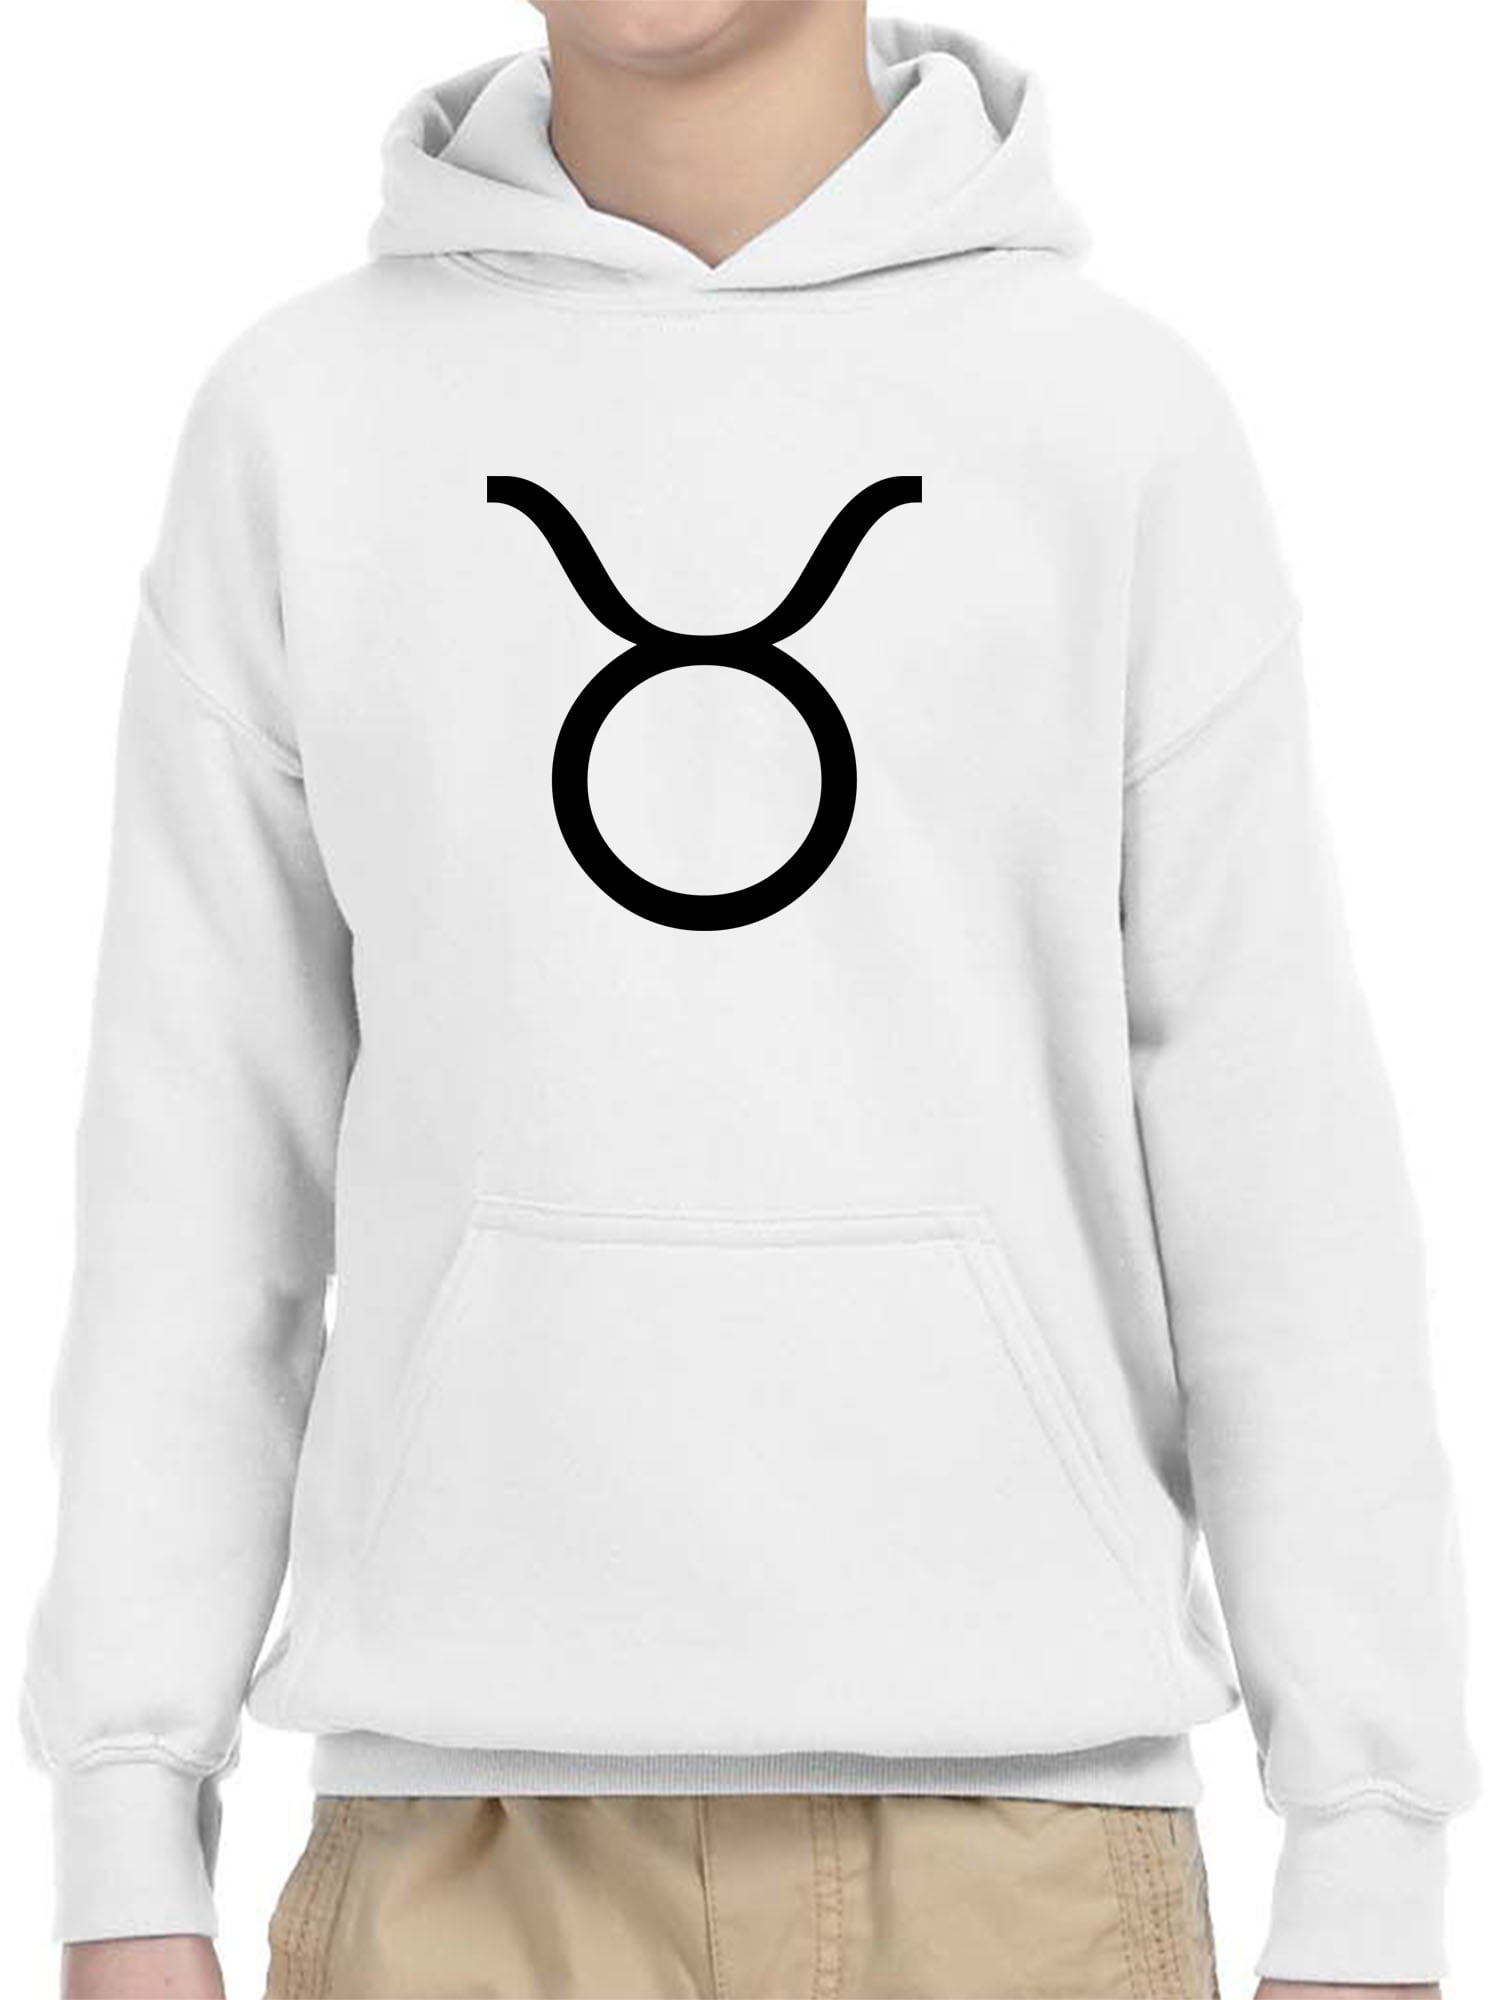 Sweatshirt Unisex Astrology Loungewear Astrological Sign Crewneck- Taurus Adult